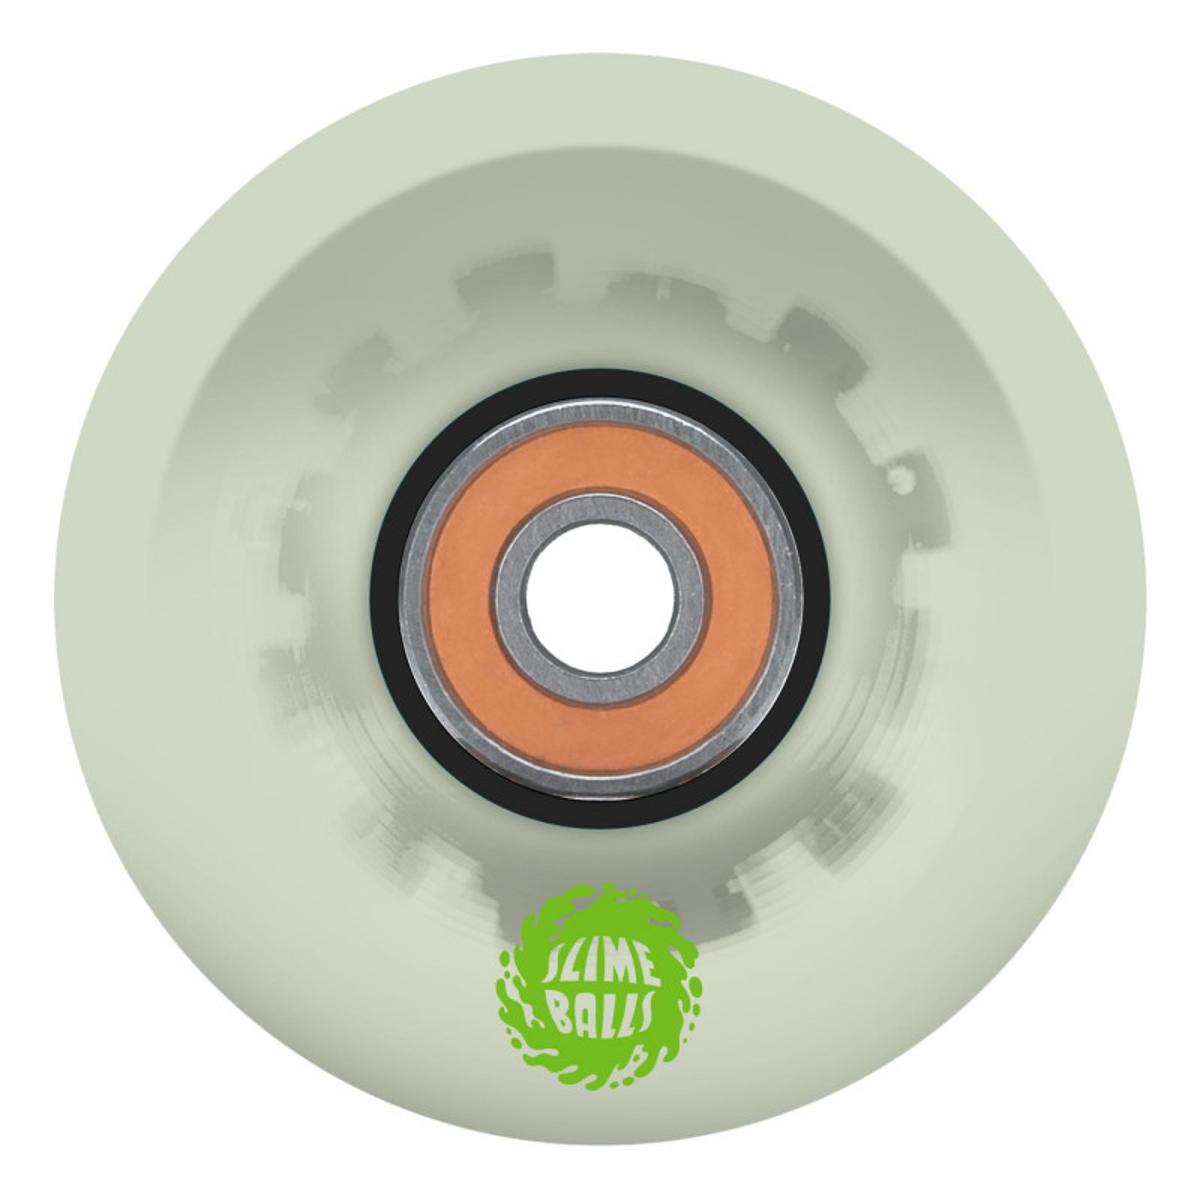 Slime Balls Creature Atomic Light 60mm Roues de skateboard 78a shape